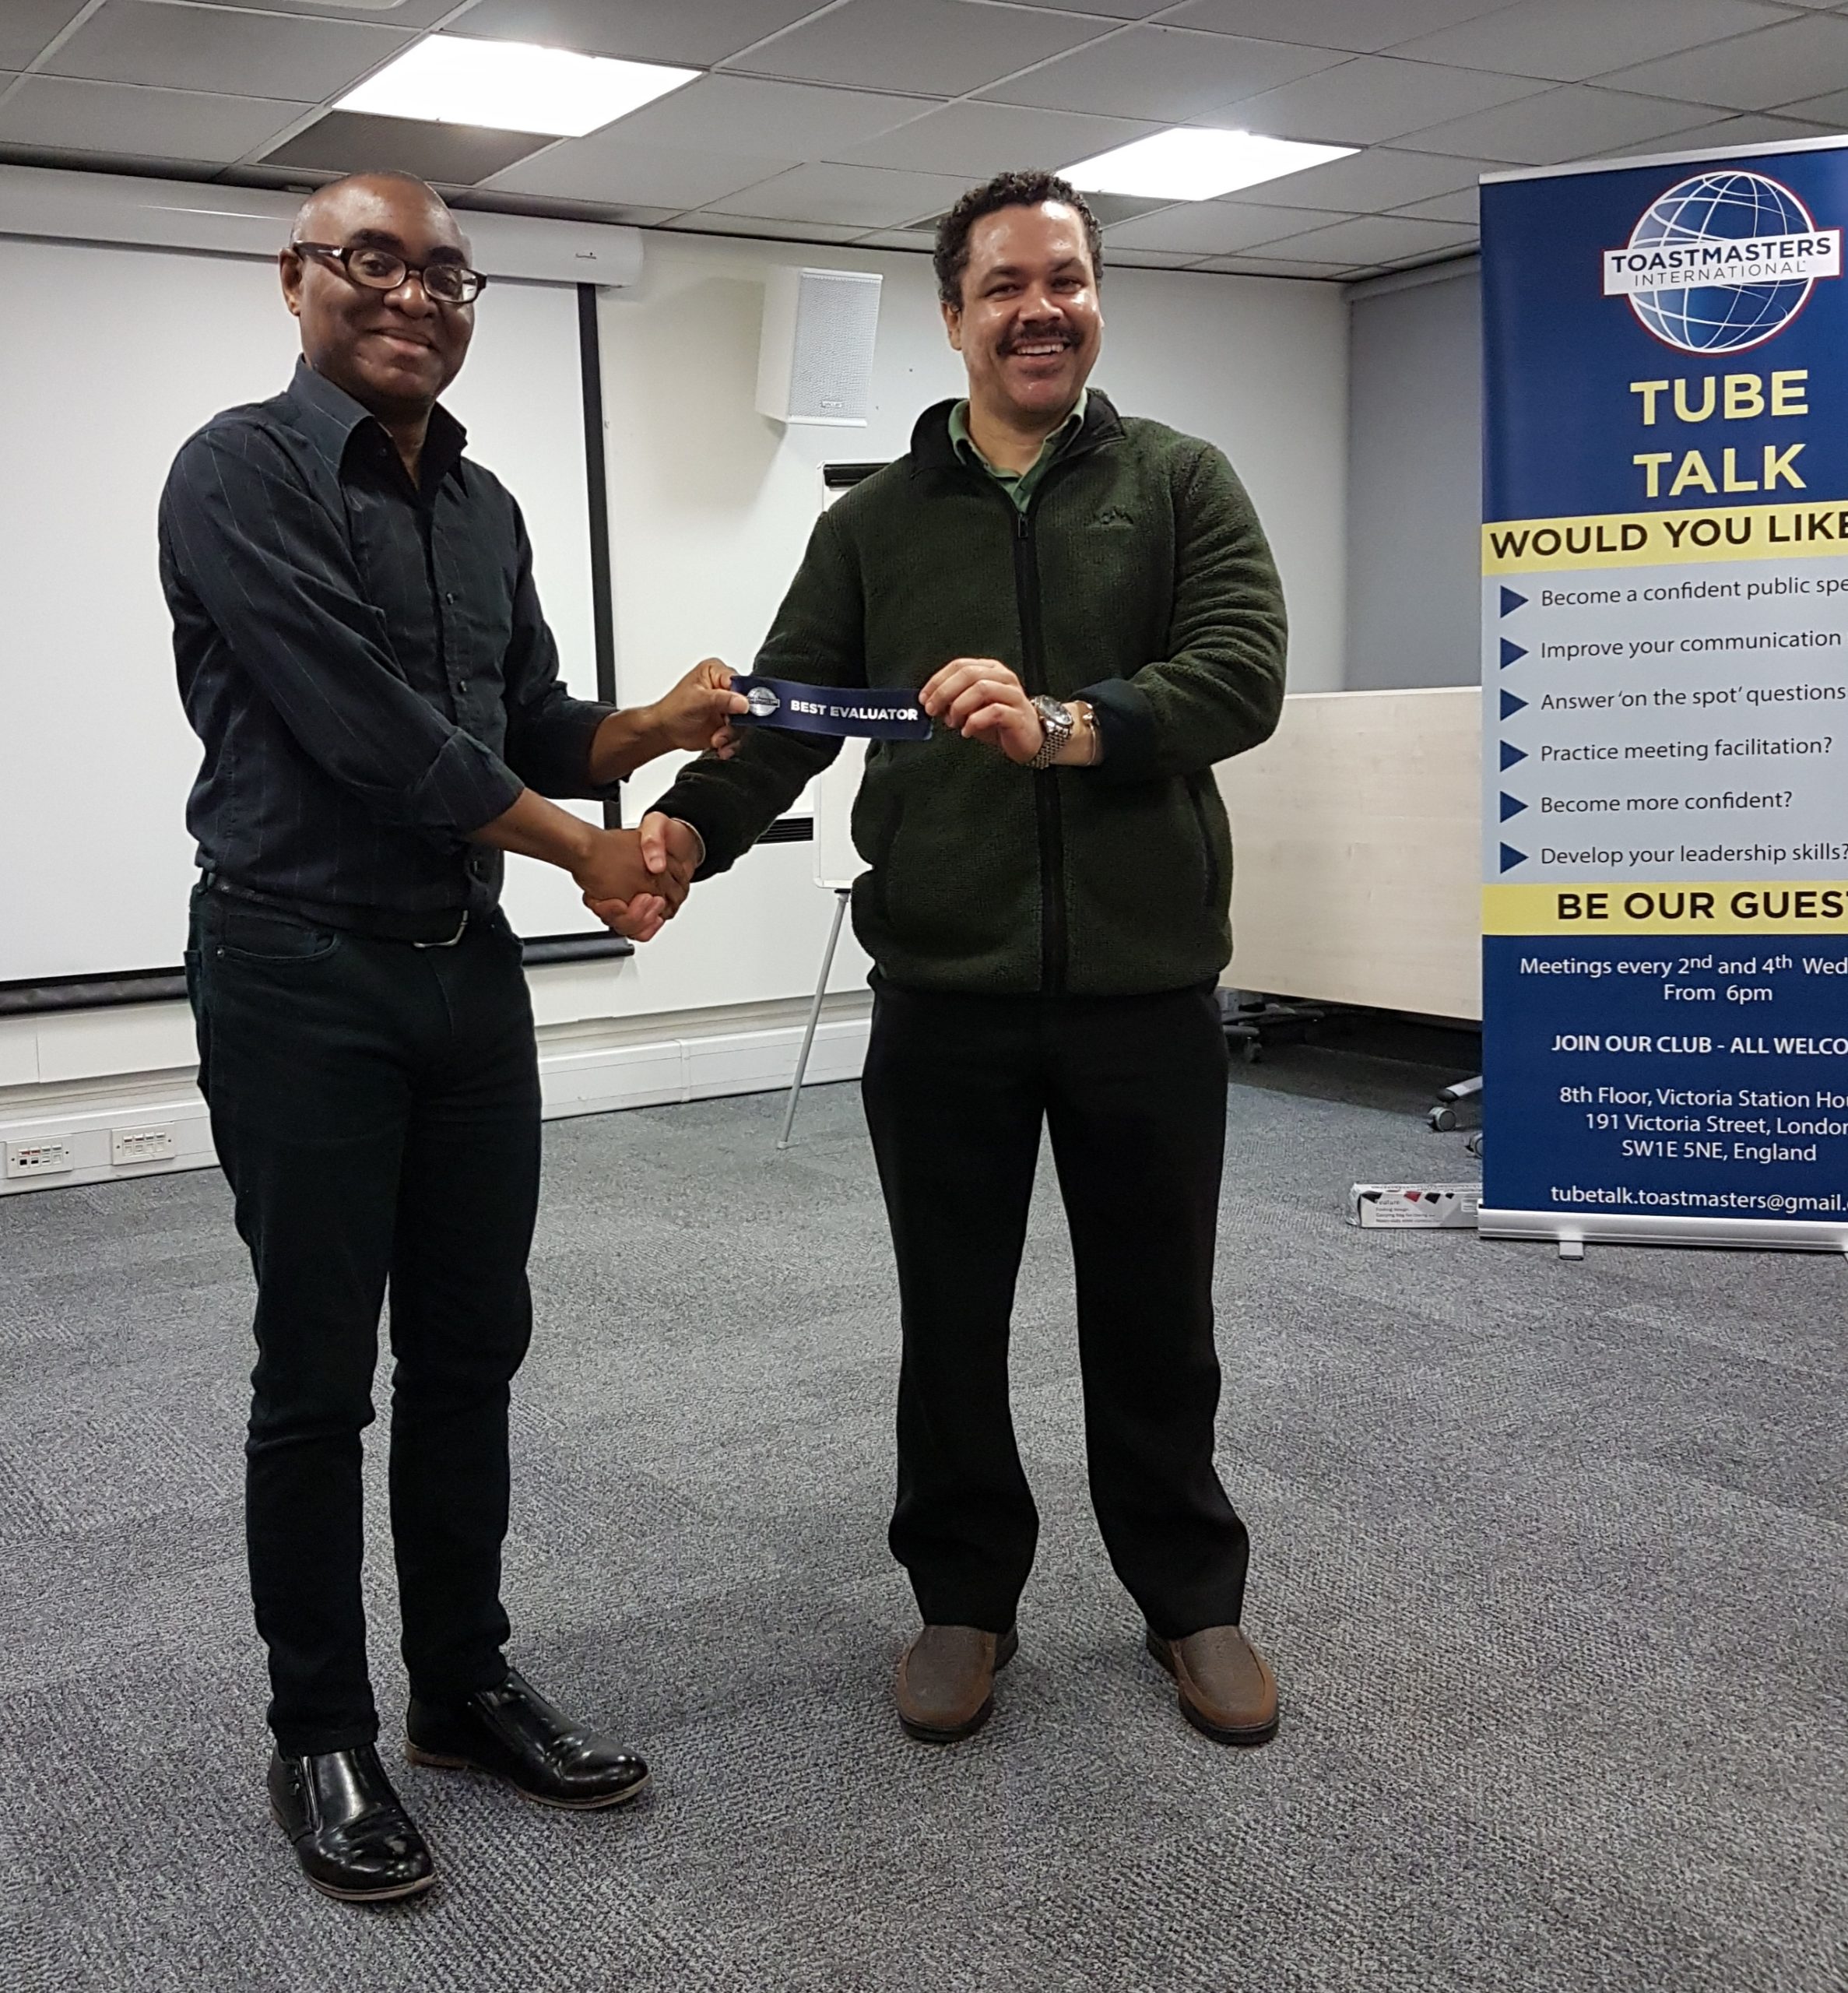 Tube Talk Toastmasters Club in London - presenting an award